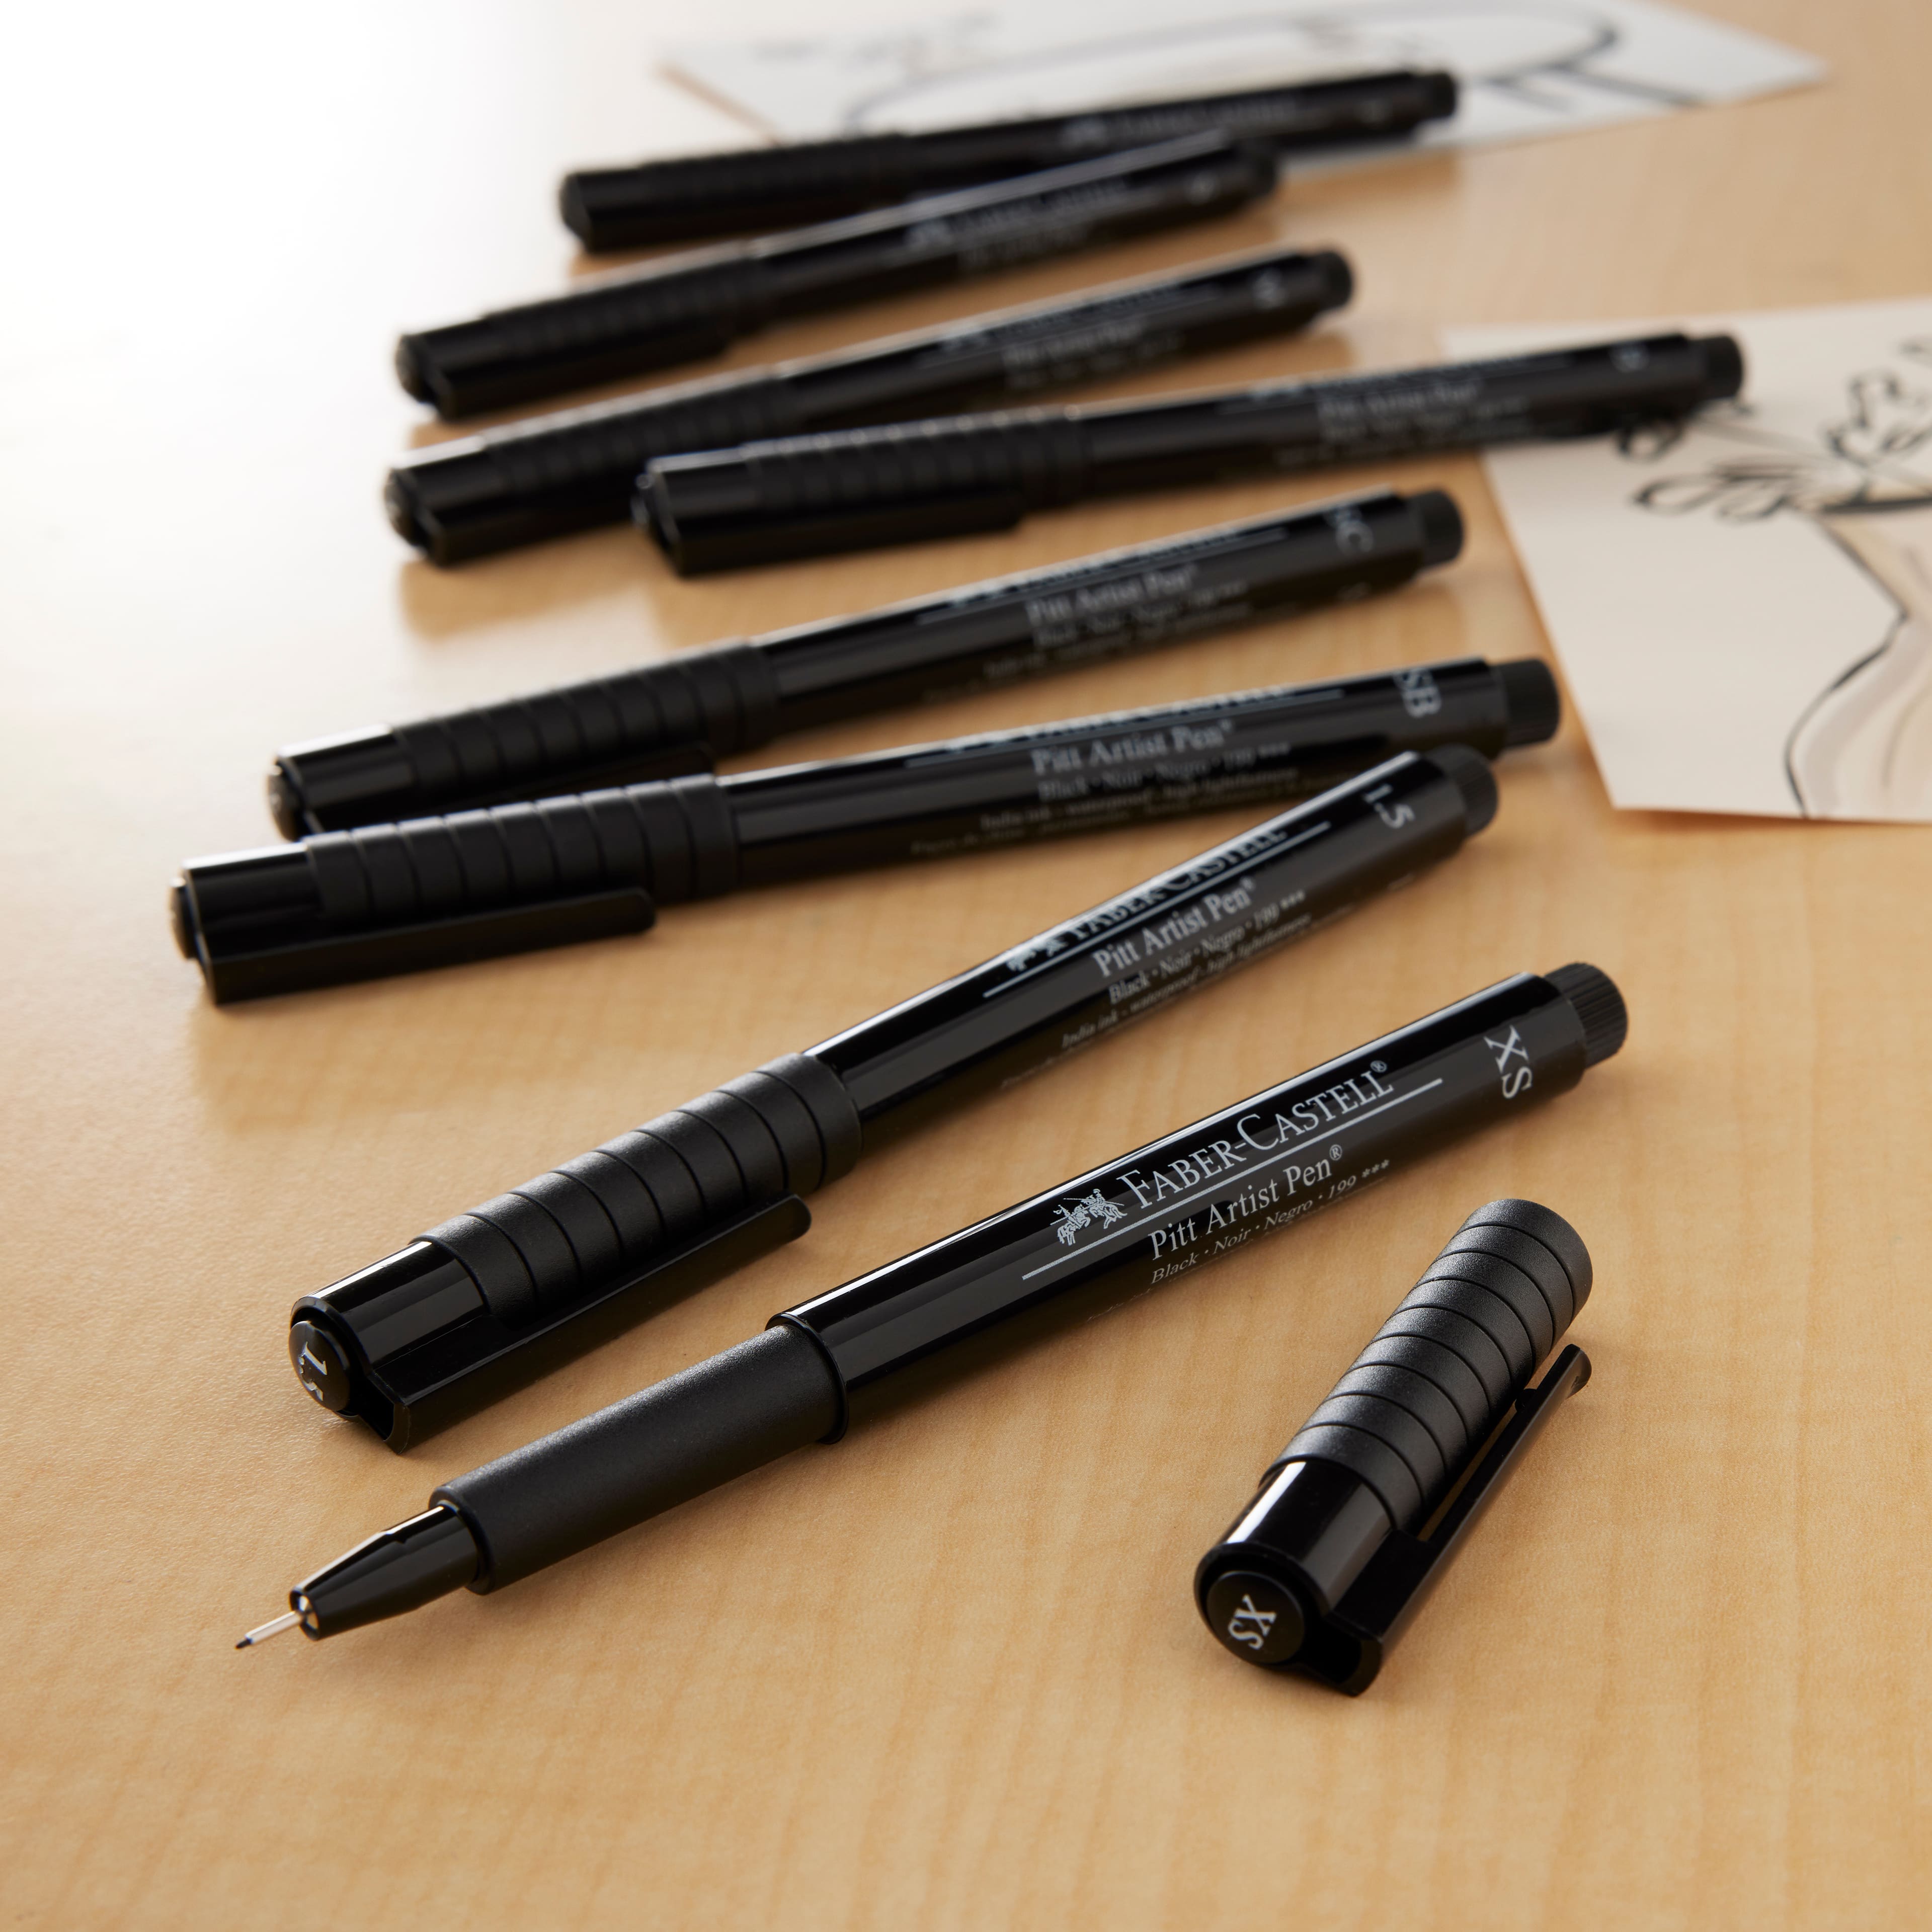 Faber-Castell Pitt Artist Pen® Black - Wallet of 8